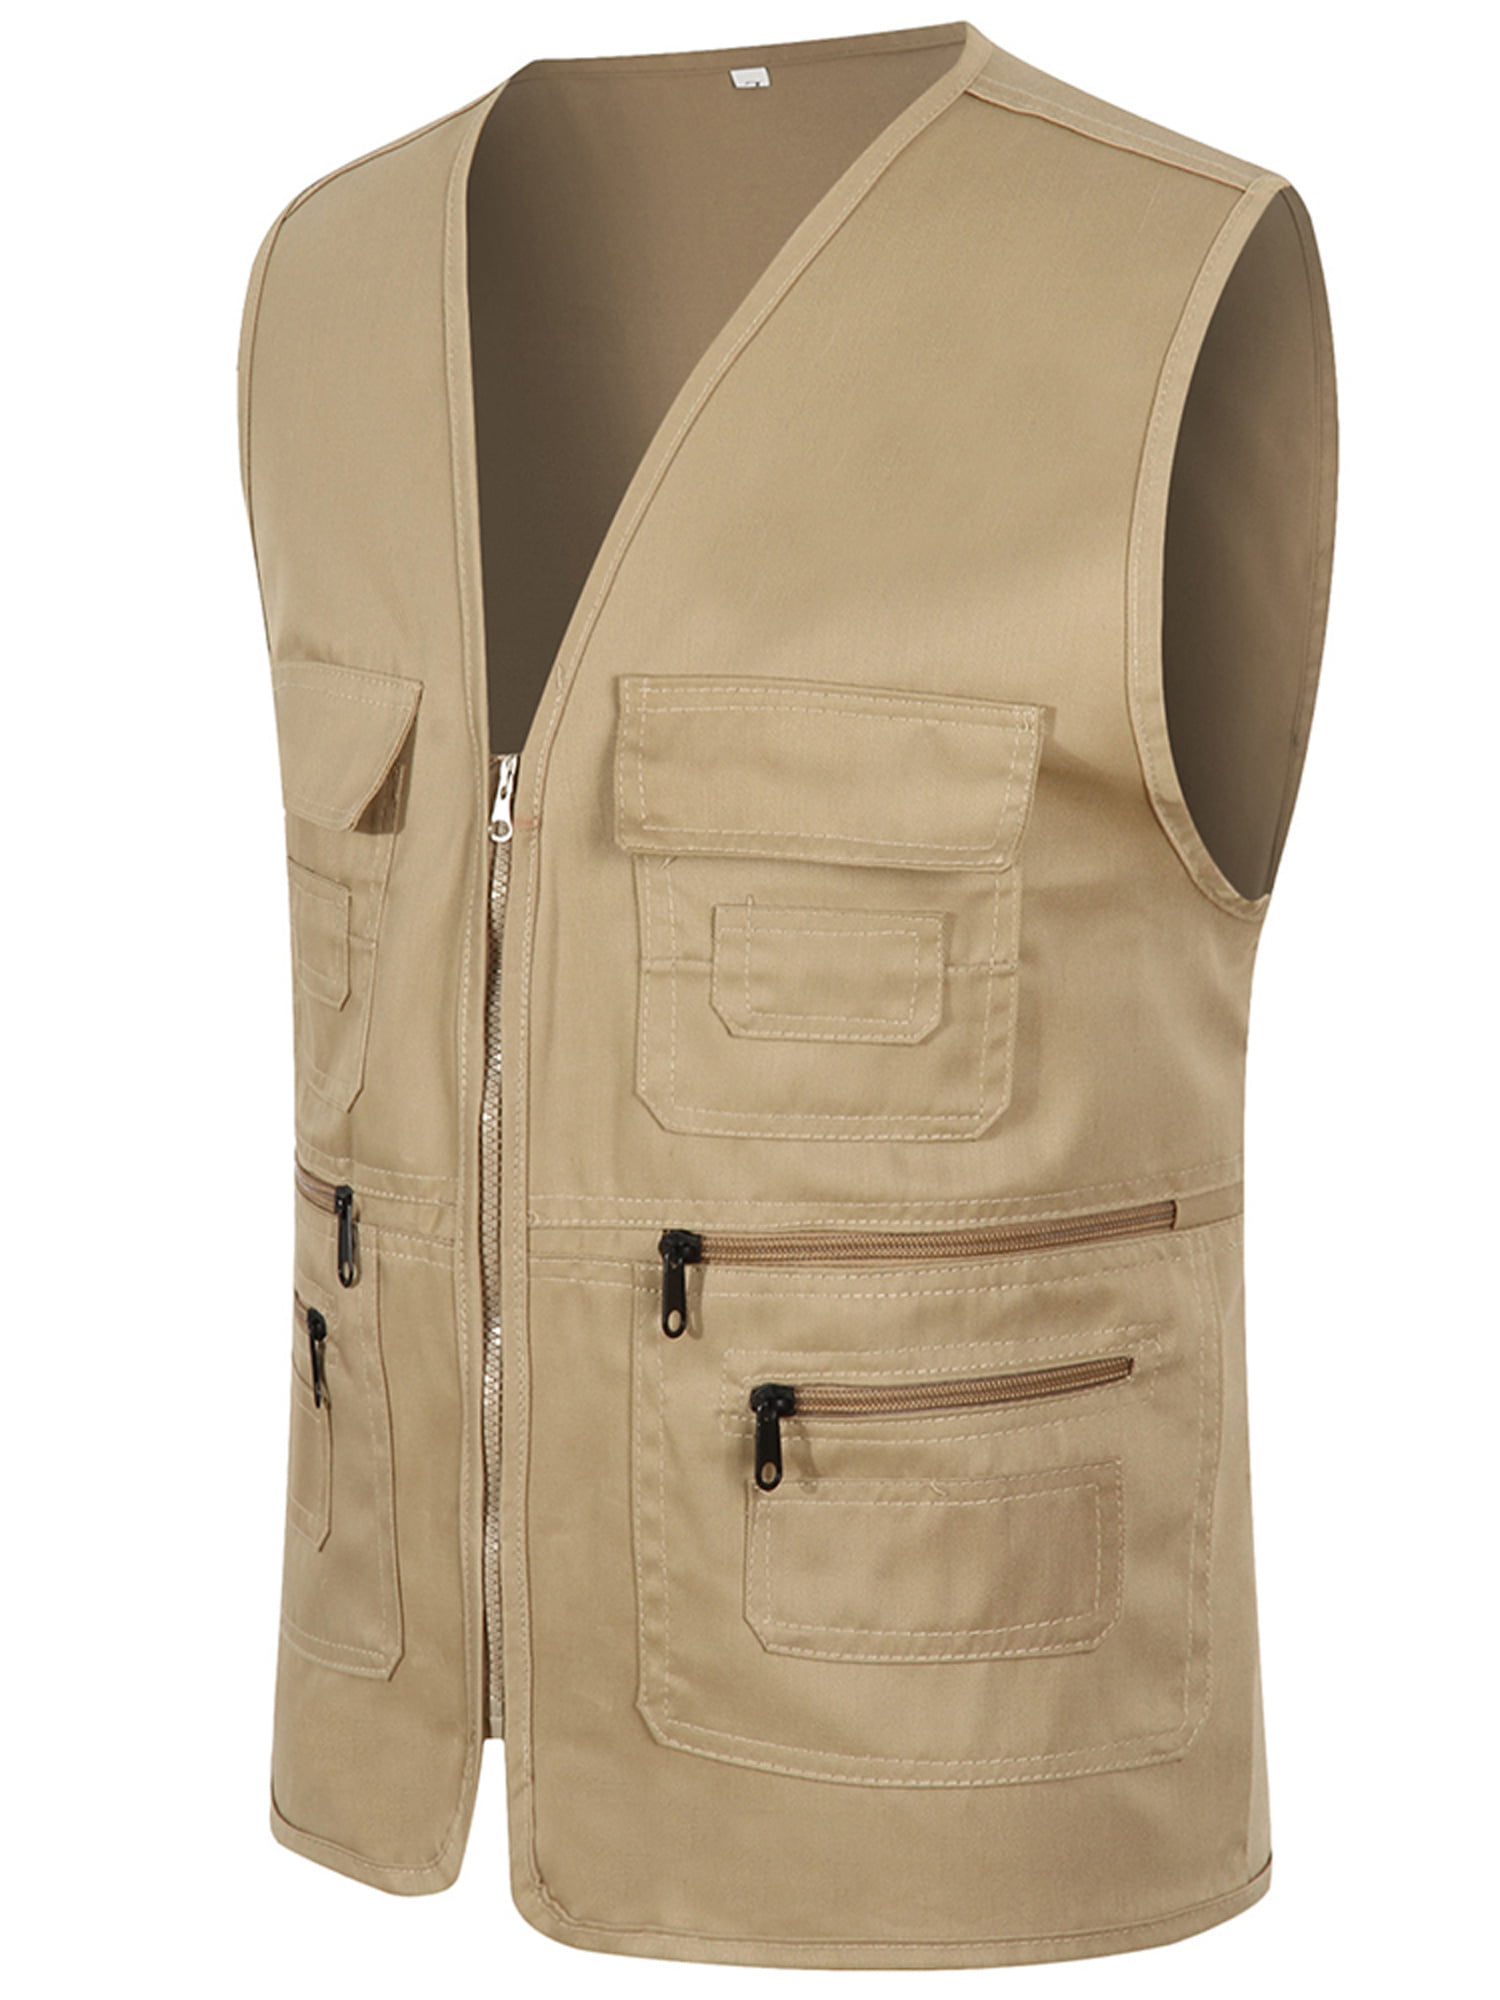 Multi Pockets Fishing Vest Outdoor Hunting Waistcoat Travel Casual Camo Jacket 